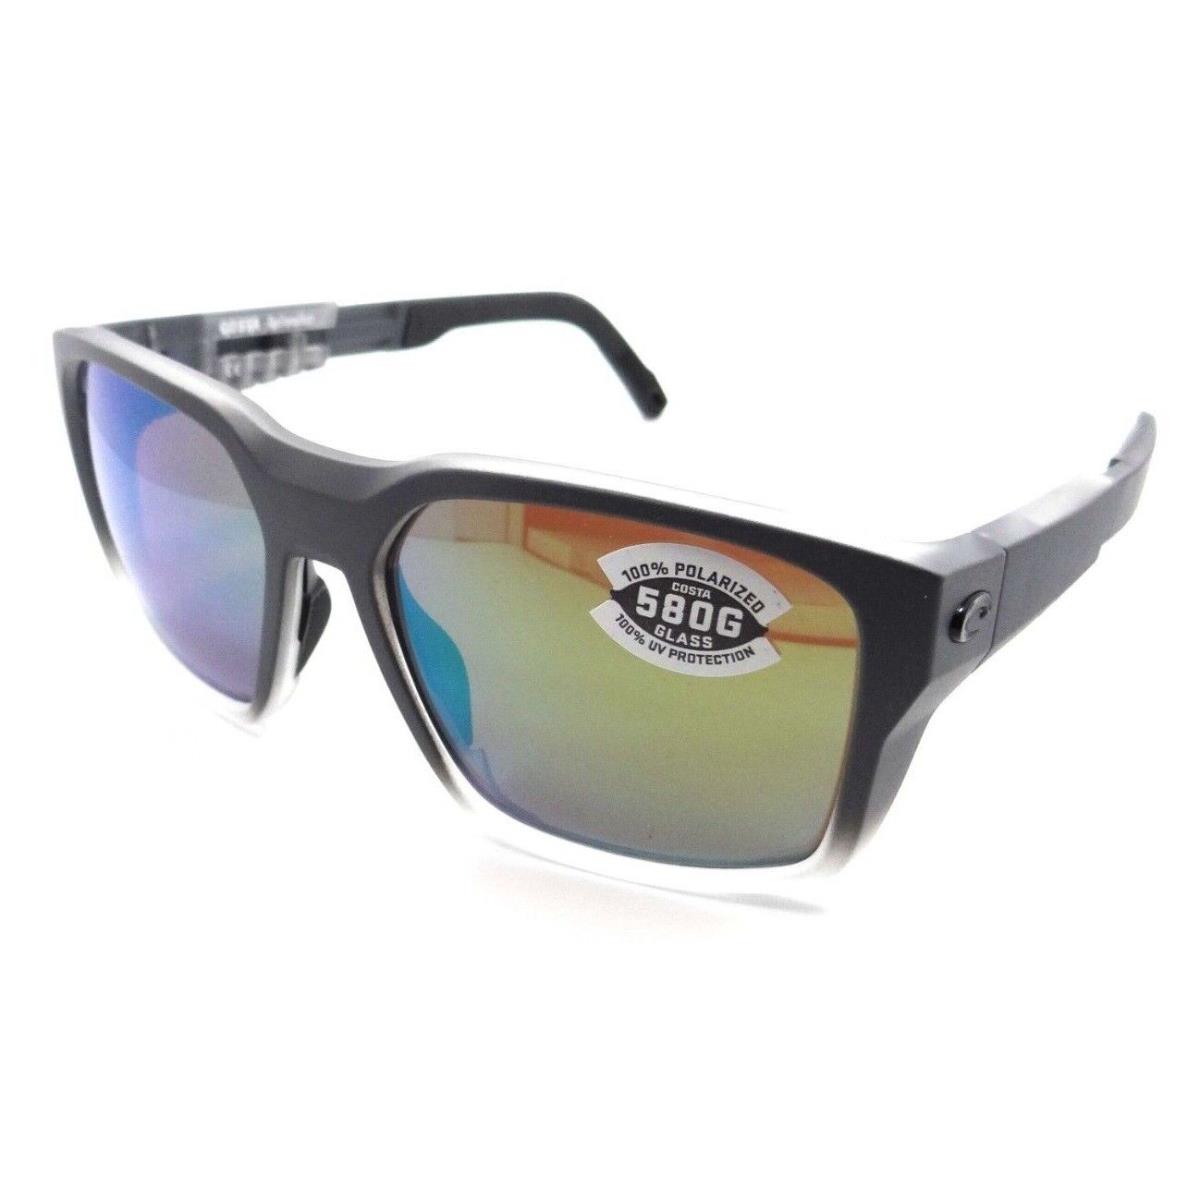 Costa Del Mar Sunglasses Tailwalker 56-17-120 Matte Fog Gray / Green Mirror 580G - Multicolor Frame